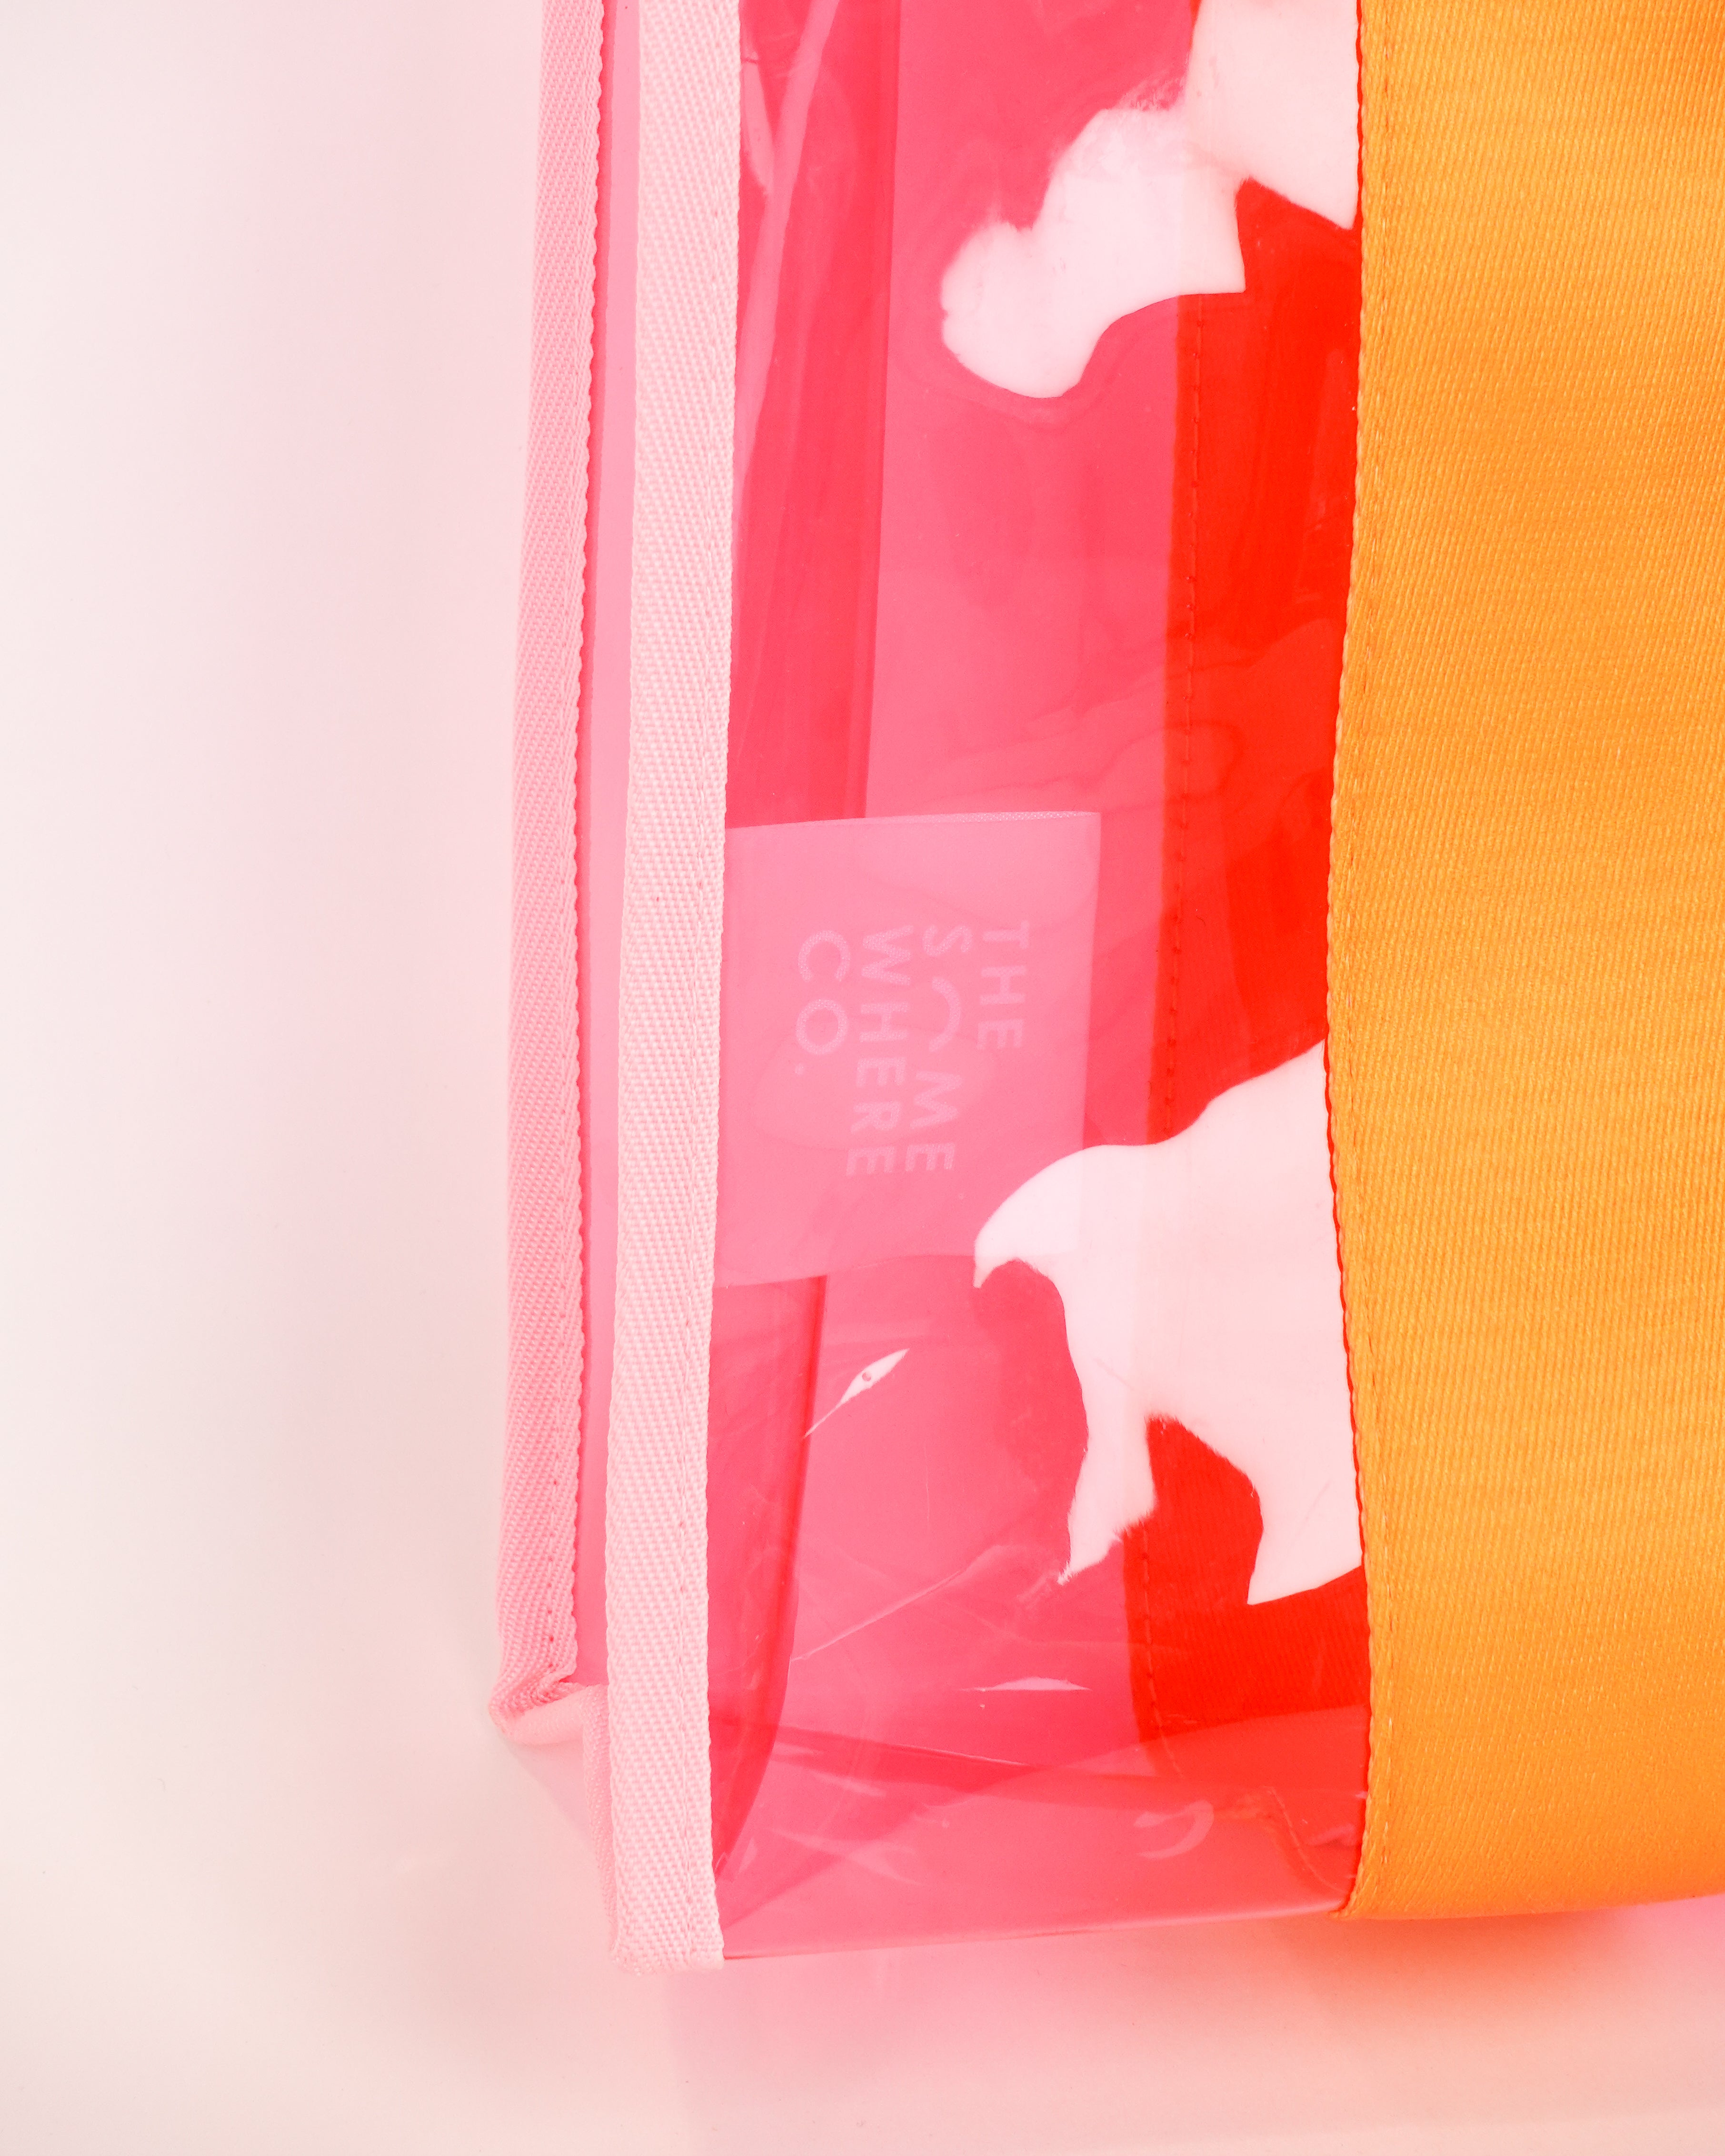 Orange & Pink Cheeky Tote Bag